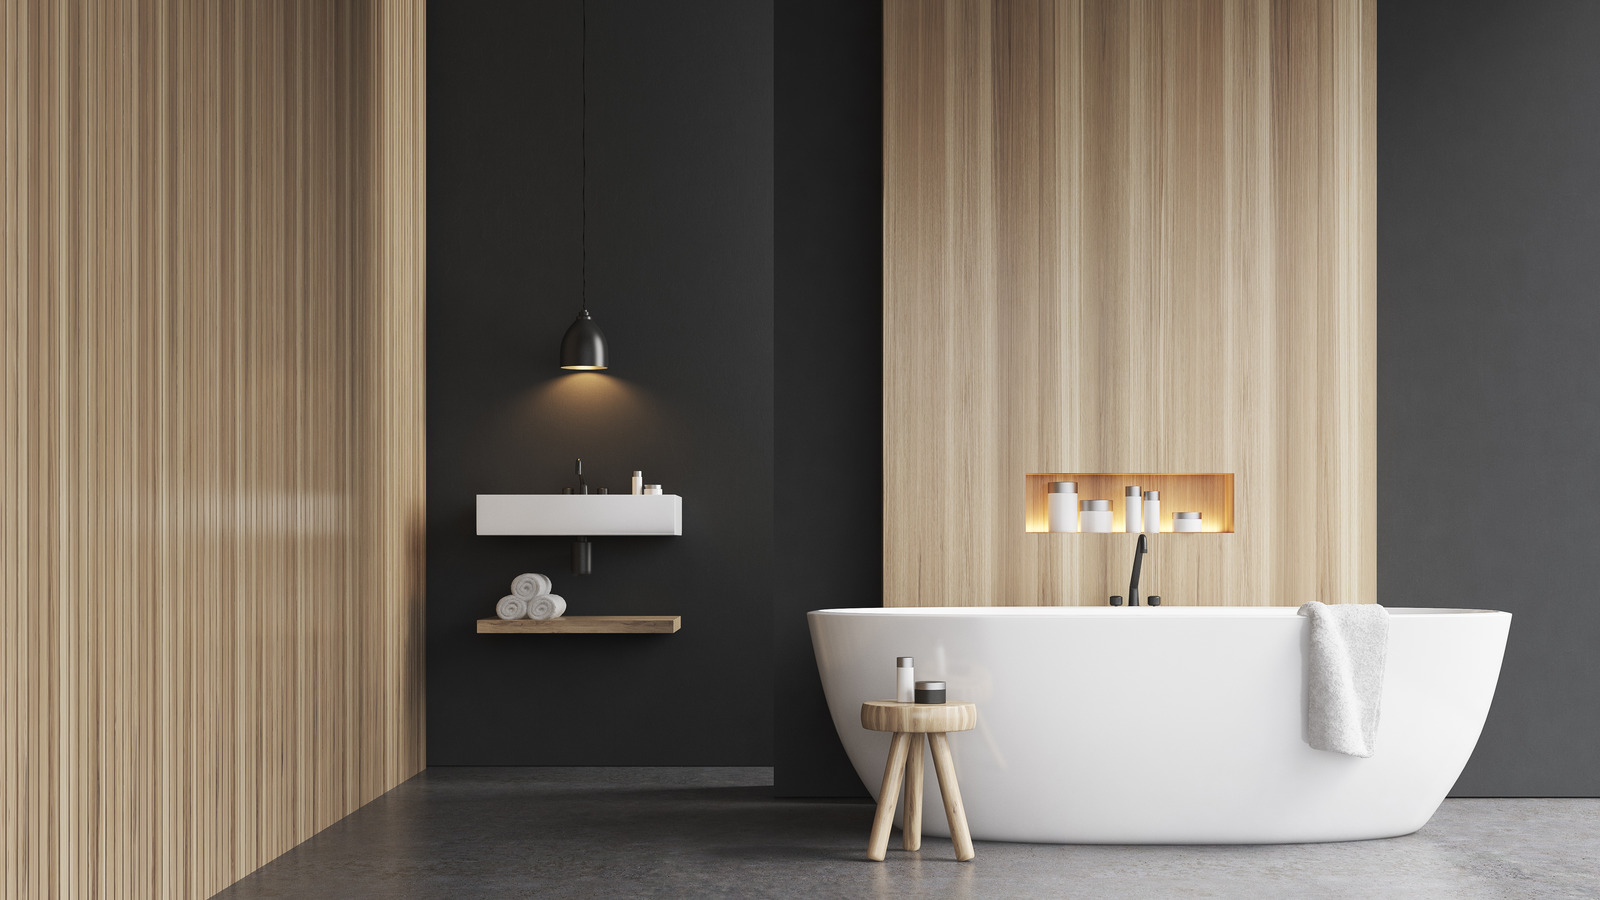 29 Black And Gold Bathroom Decor Ideas - Shelterness